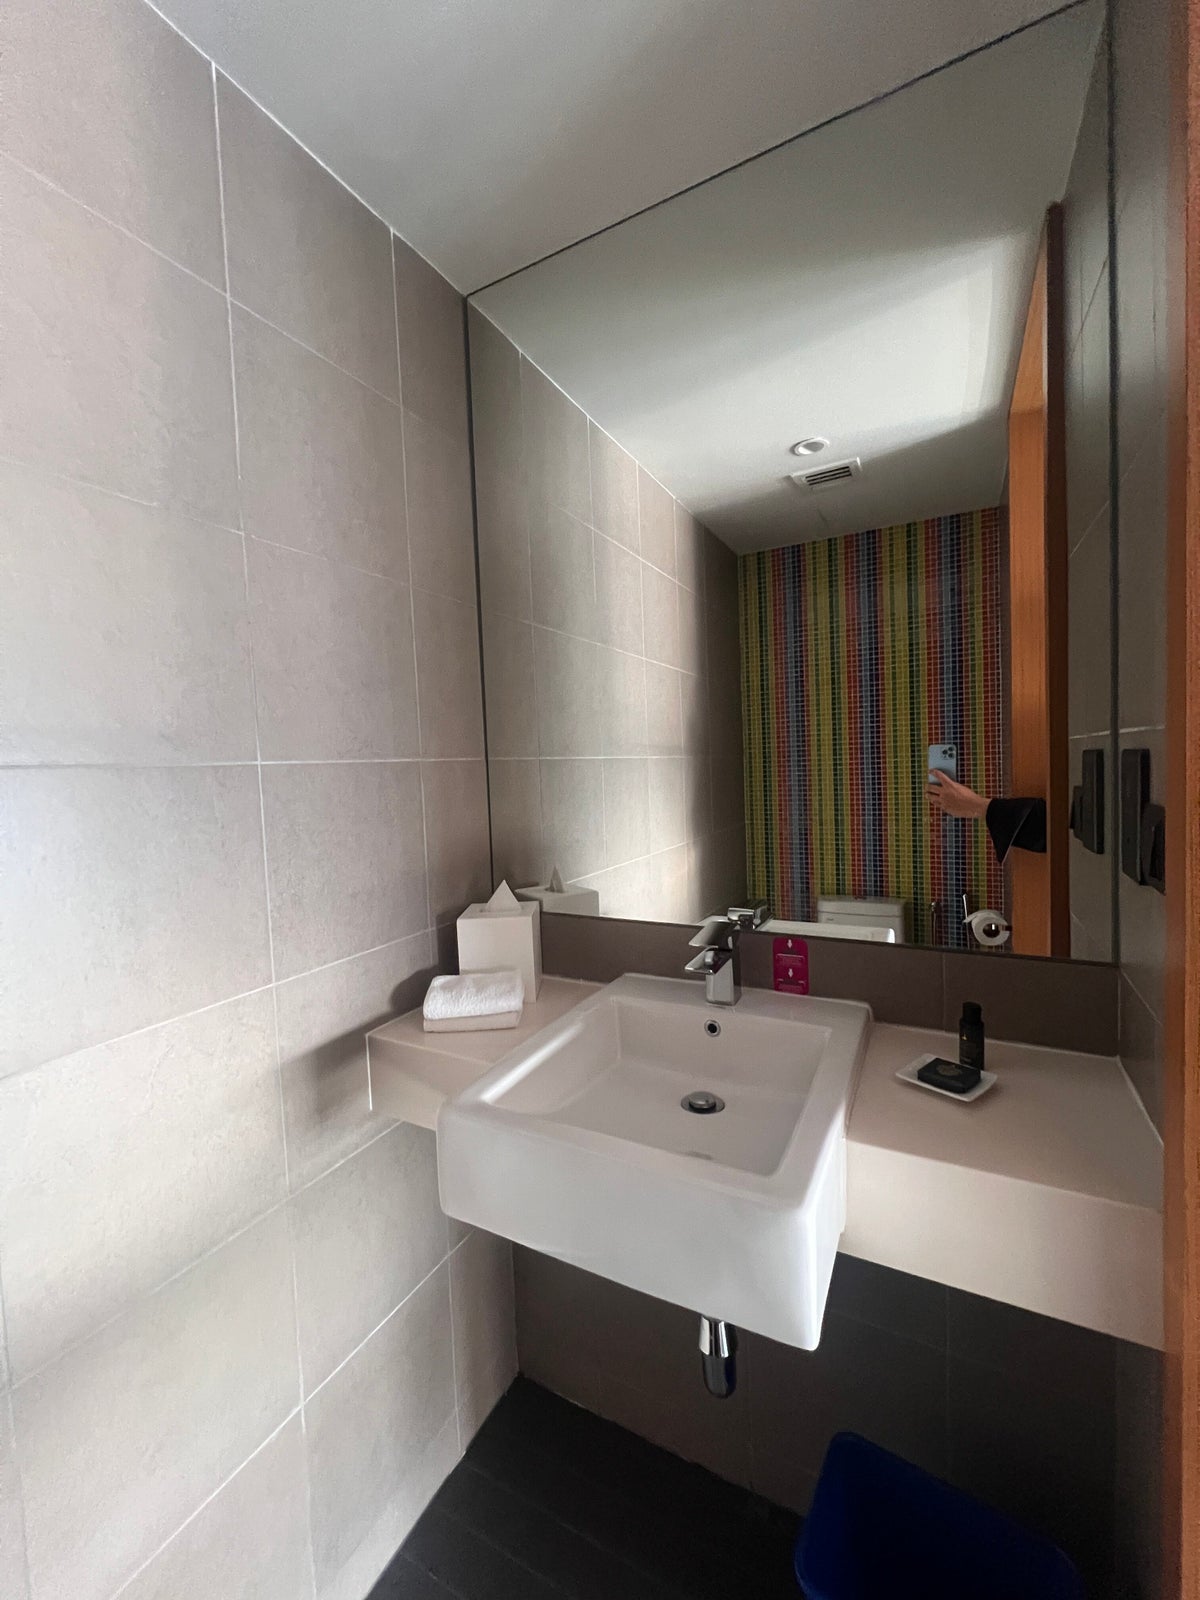 Aloft Kuala Lumpur Sentral room half bathroom sink